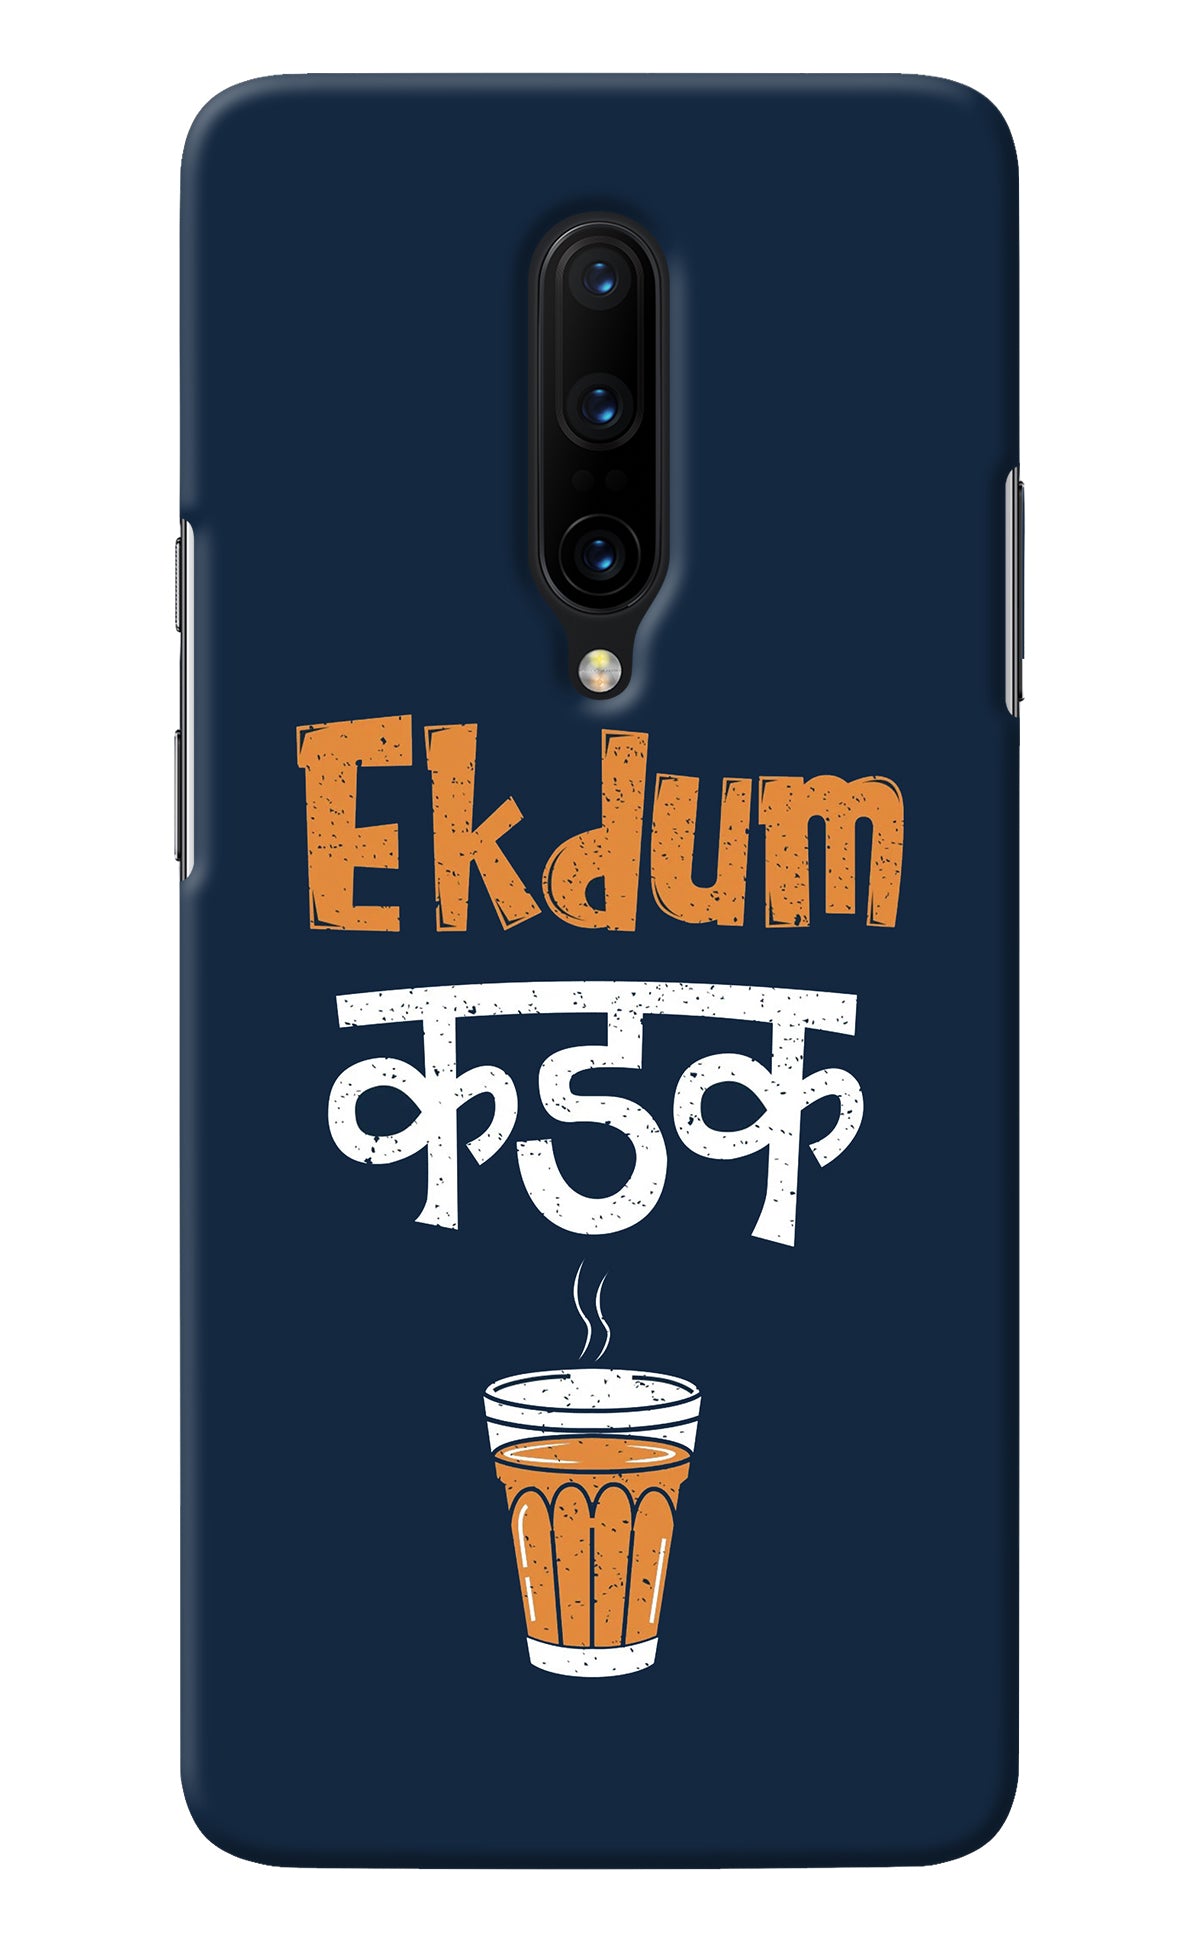 Ekdum Kadak Chai Oneplus 7 Pro Back Cover